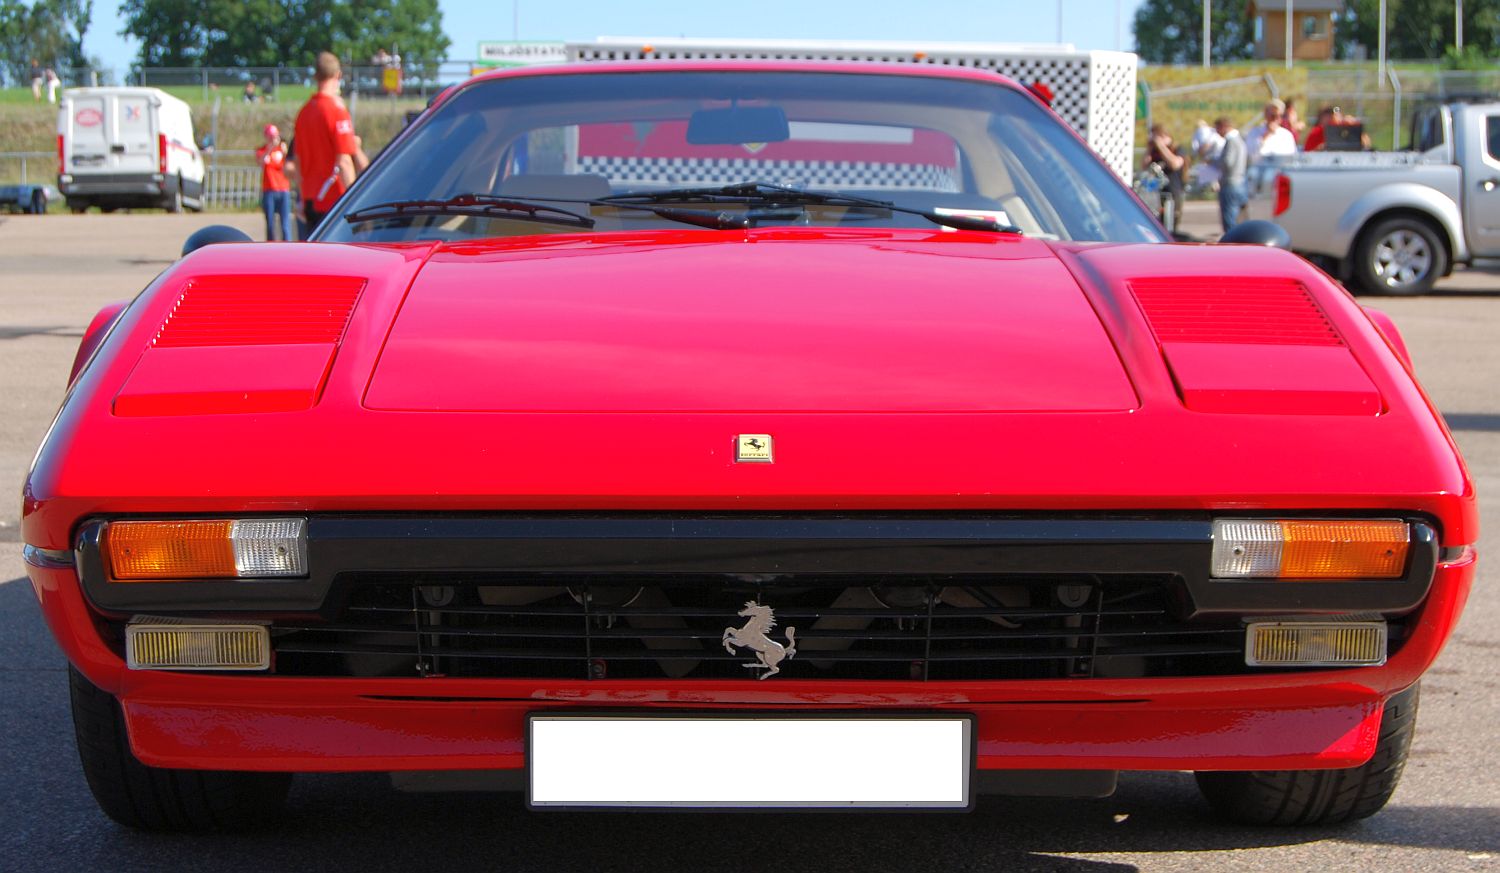 Ferrari 308 GTB front